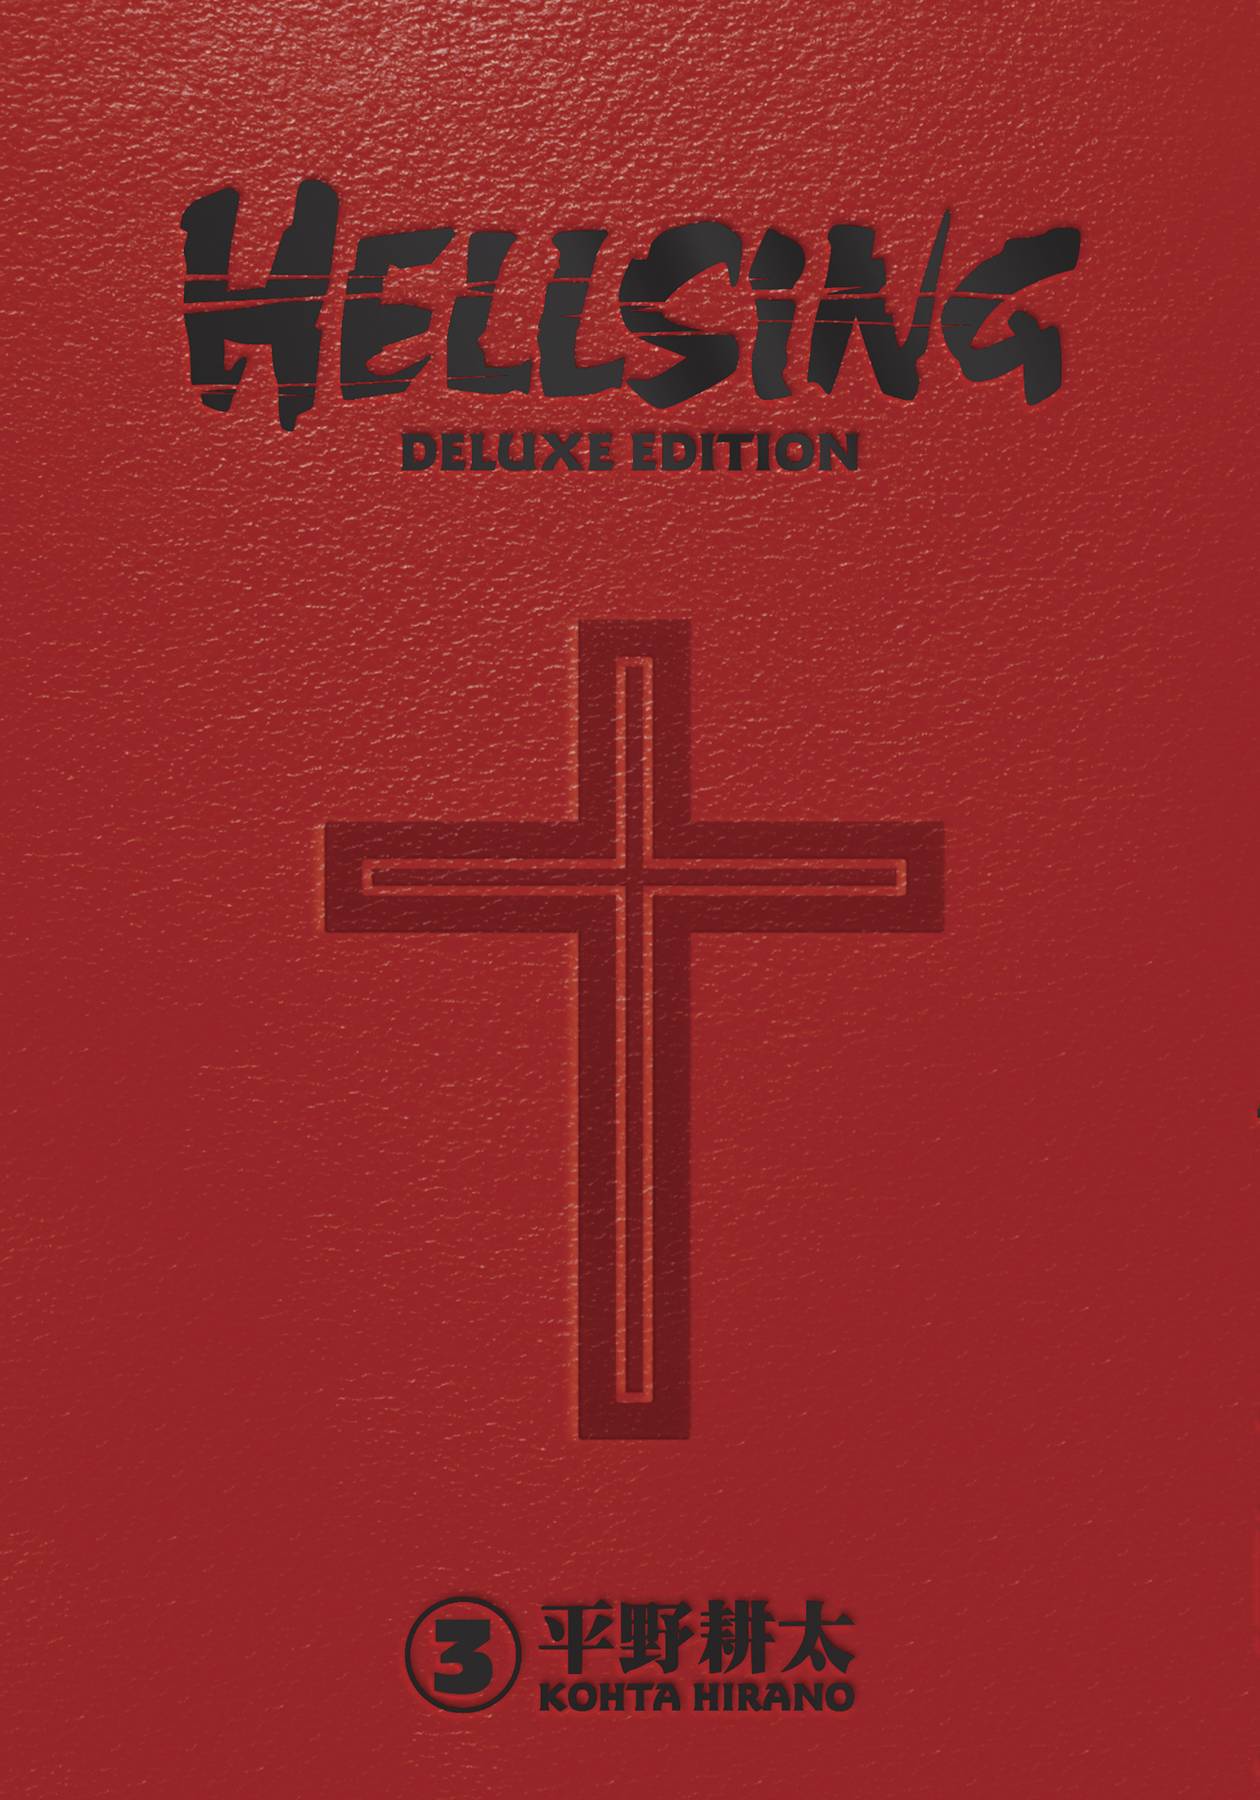 Hellsing Deluxe Edition HC VOL 03 King Gaming